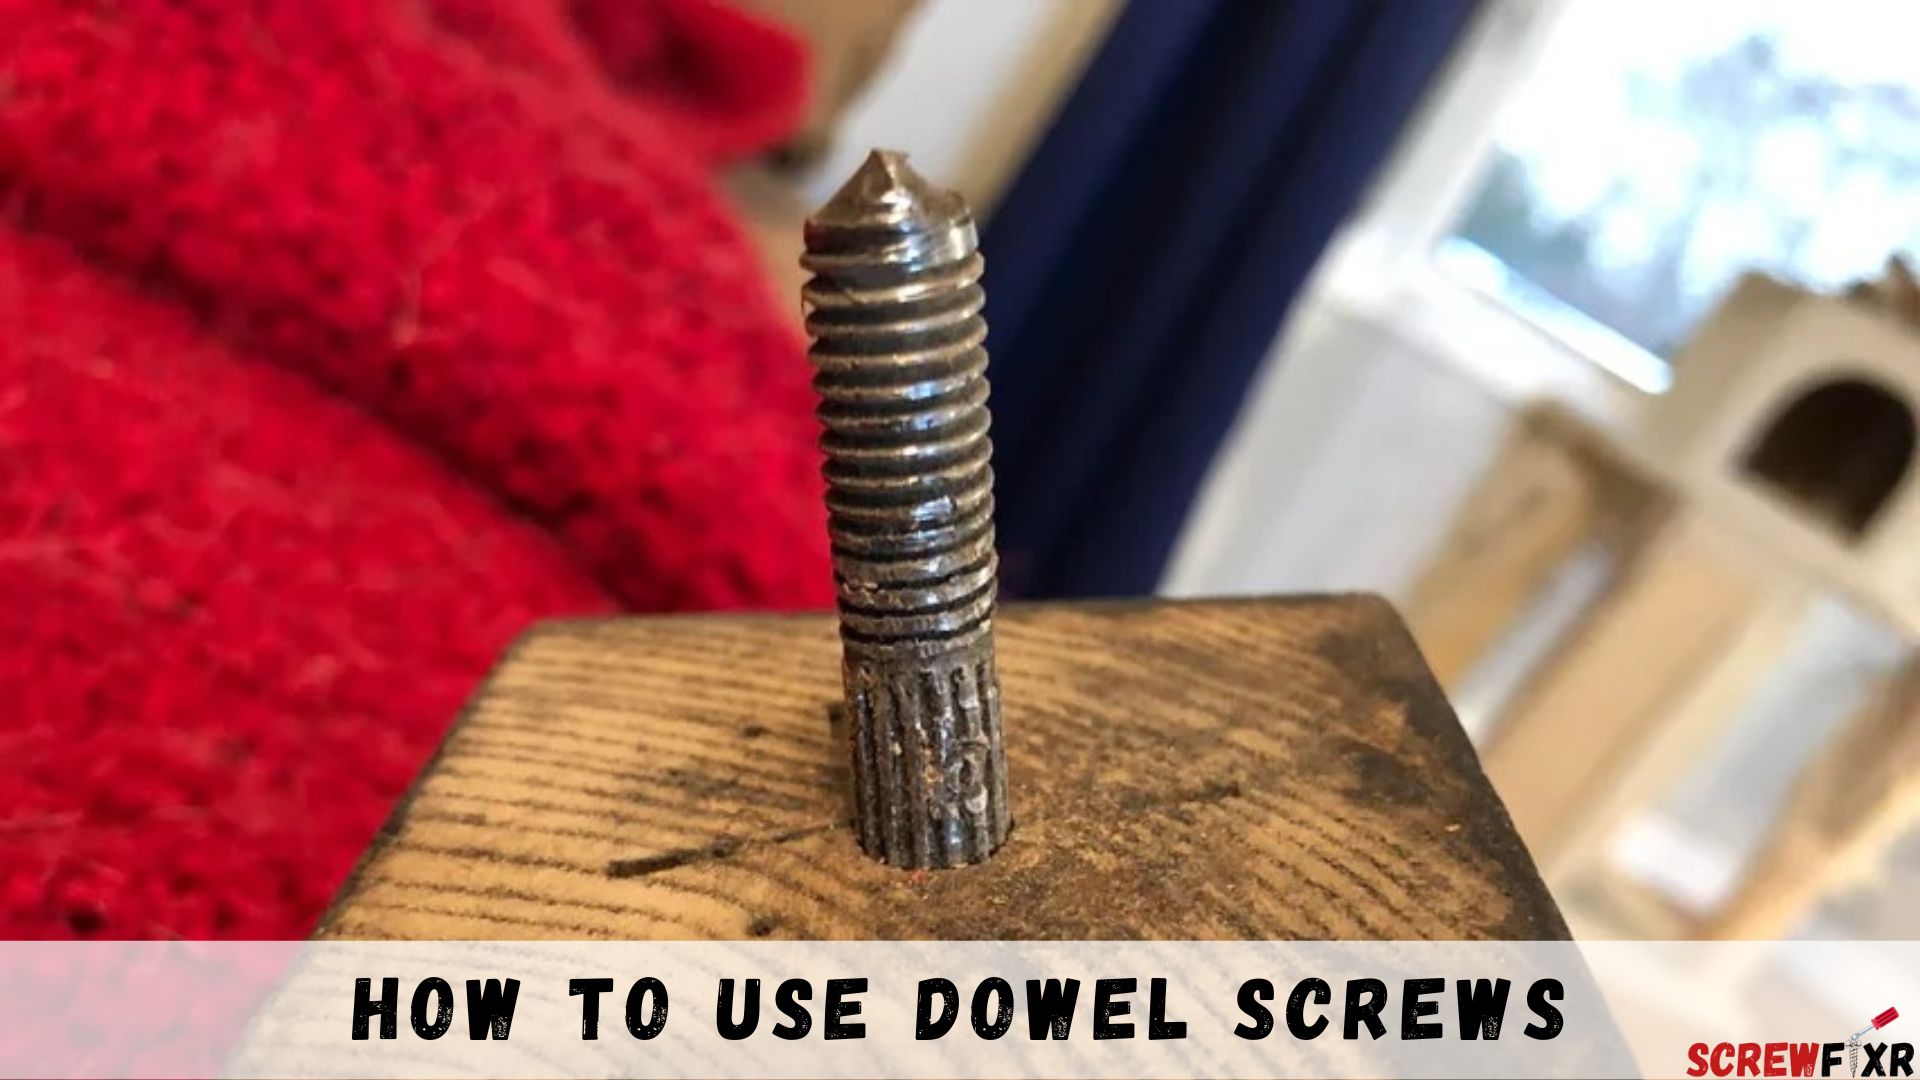 How to Use Dowel Screws